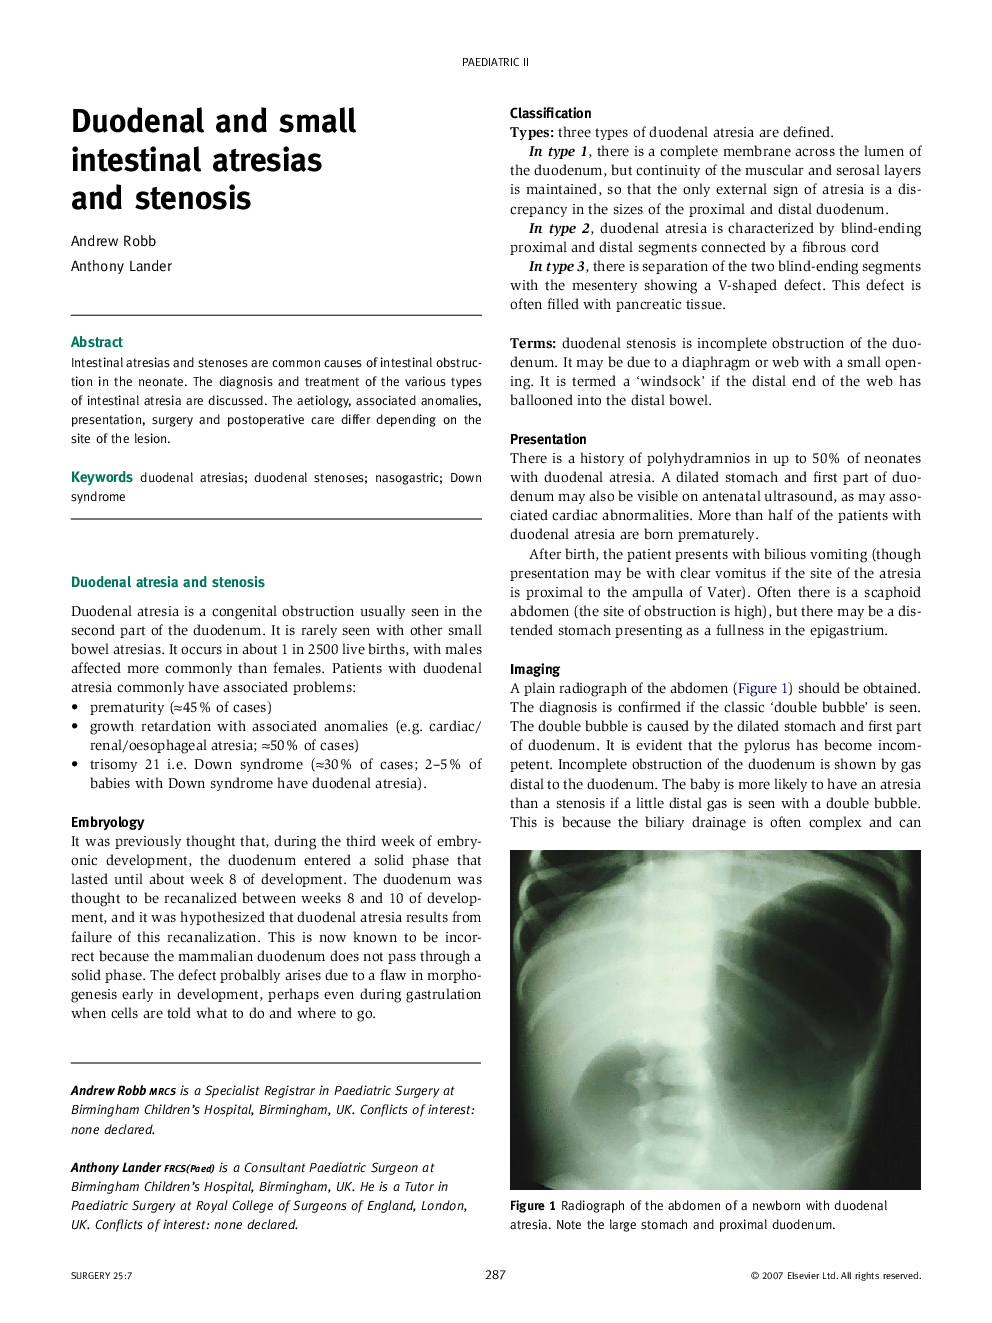 Duodenal and small intestinal atresias and stenosis